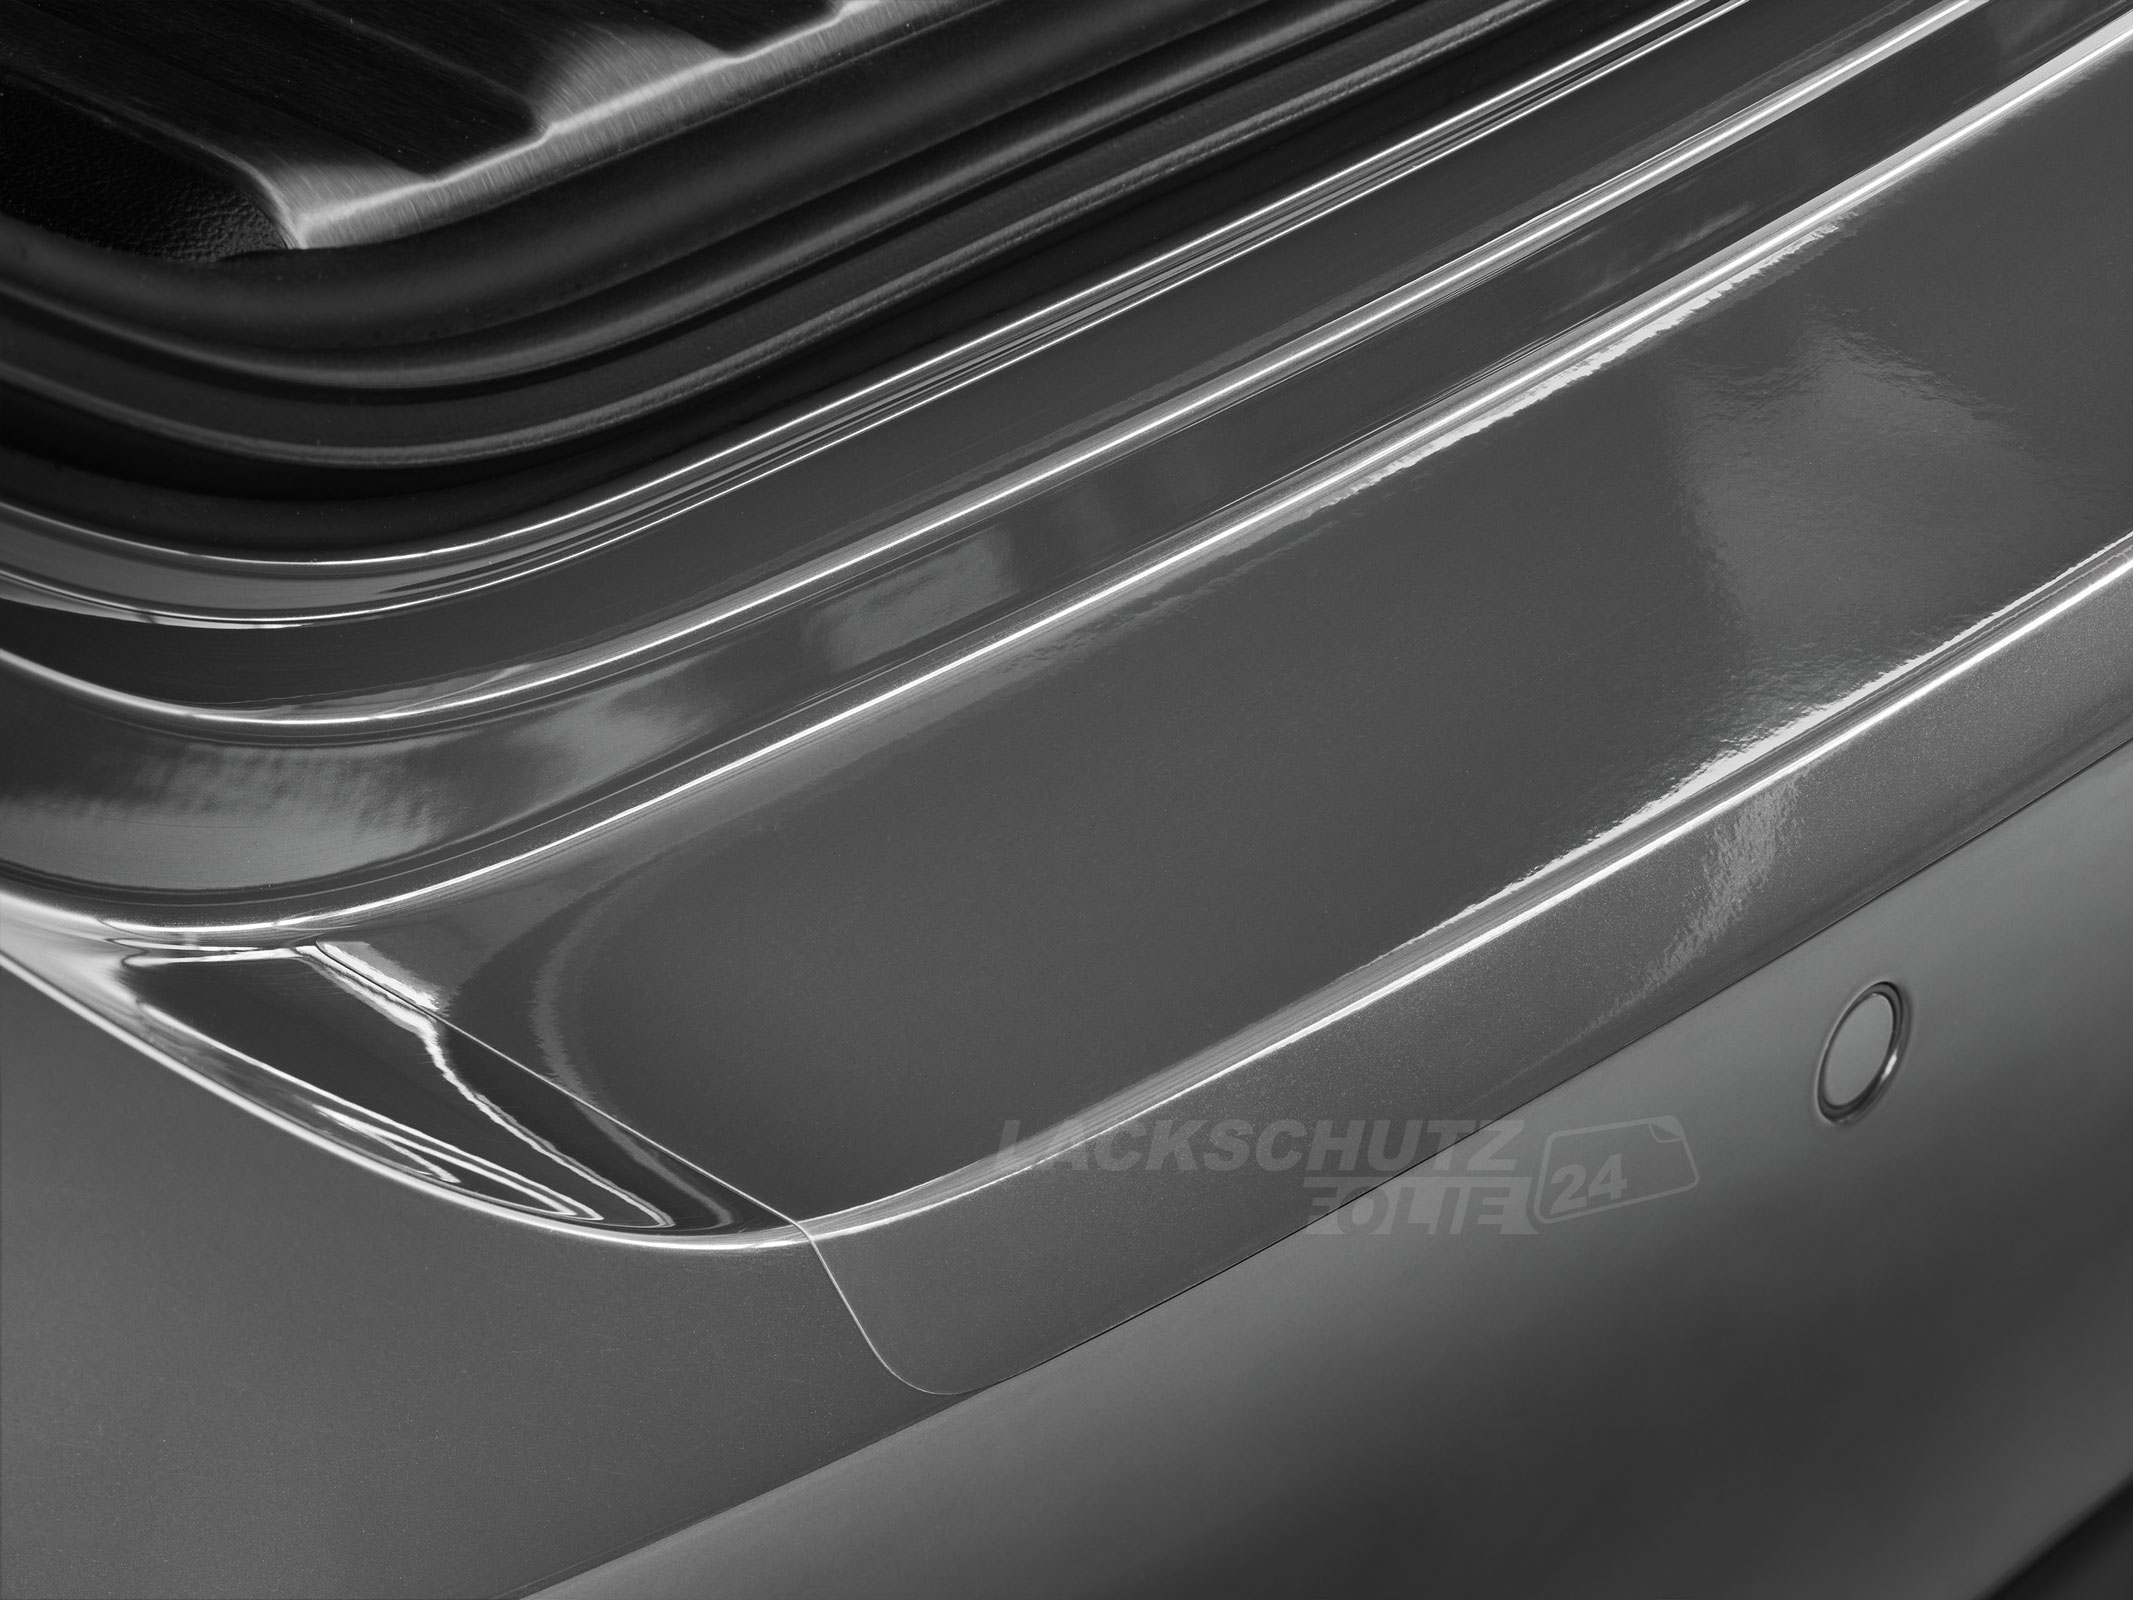 Ladekantenschutzfolie - Transparent Glatt Hochglänzend für Skoda Fabia Kombi (III) Typ NJ, ab BJ 01/2015 + Facelift